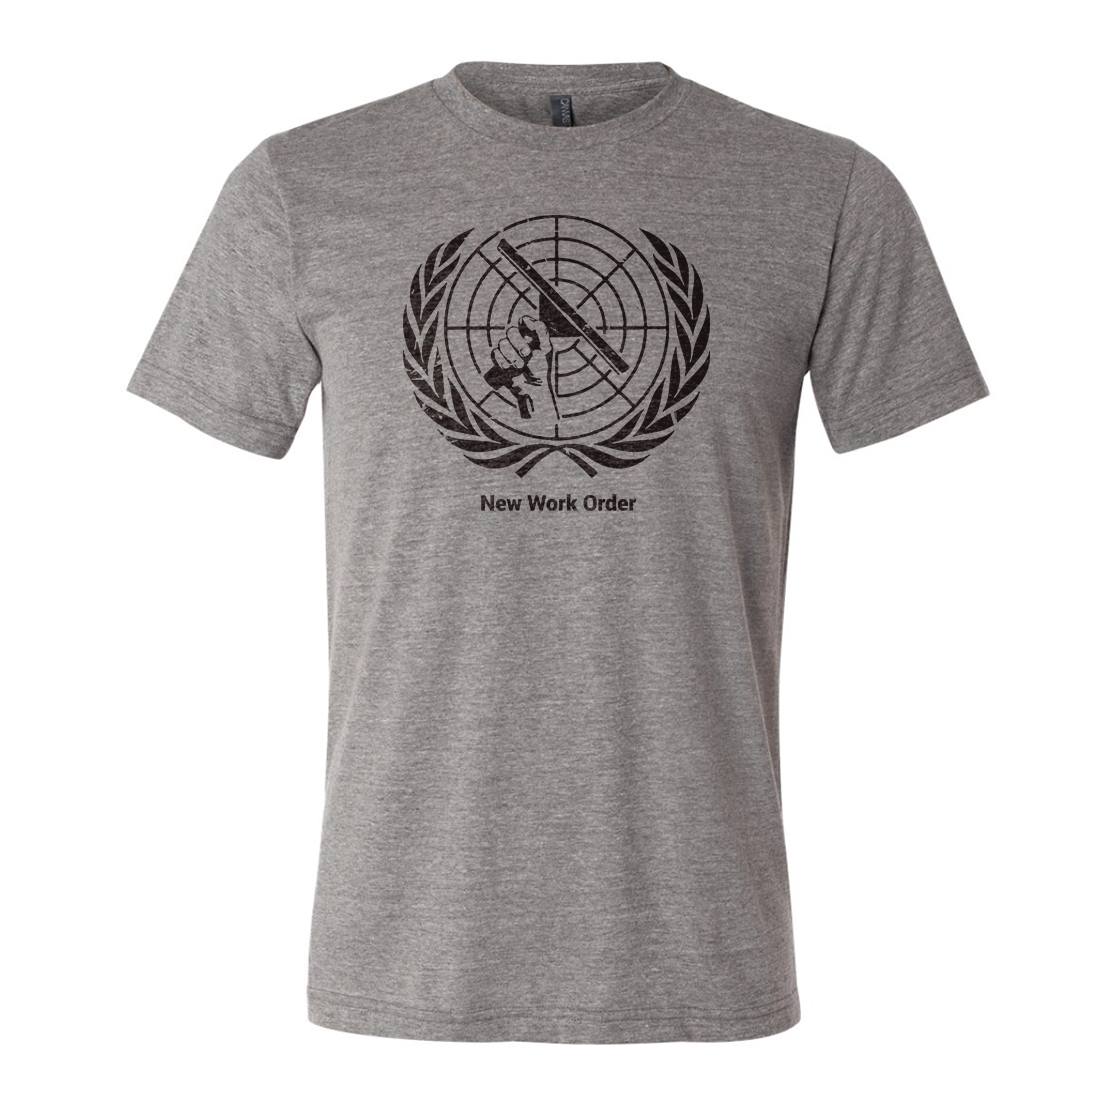 Chris T. Wilson T-Shirt - New Work Order - Size Medium - Full View